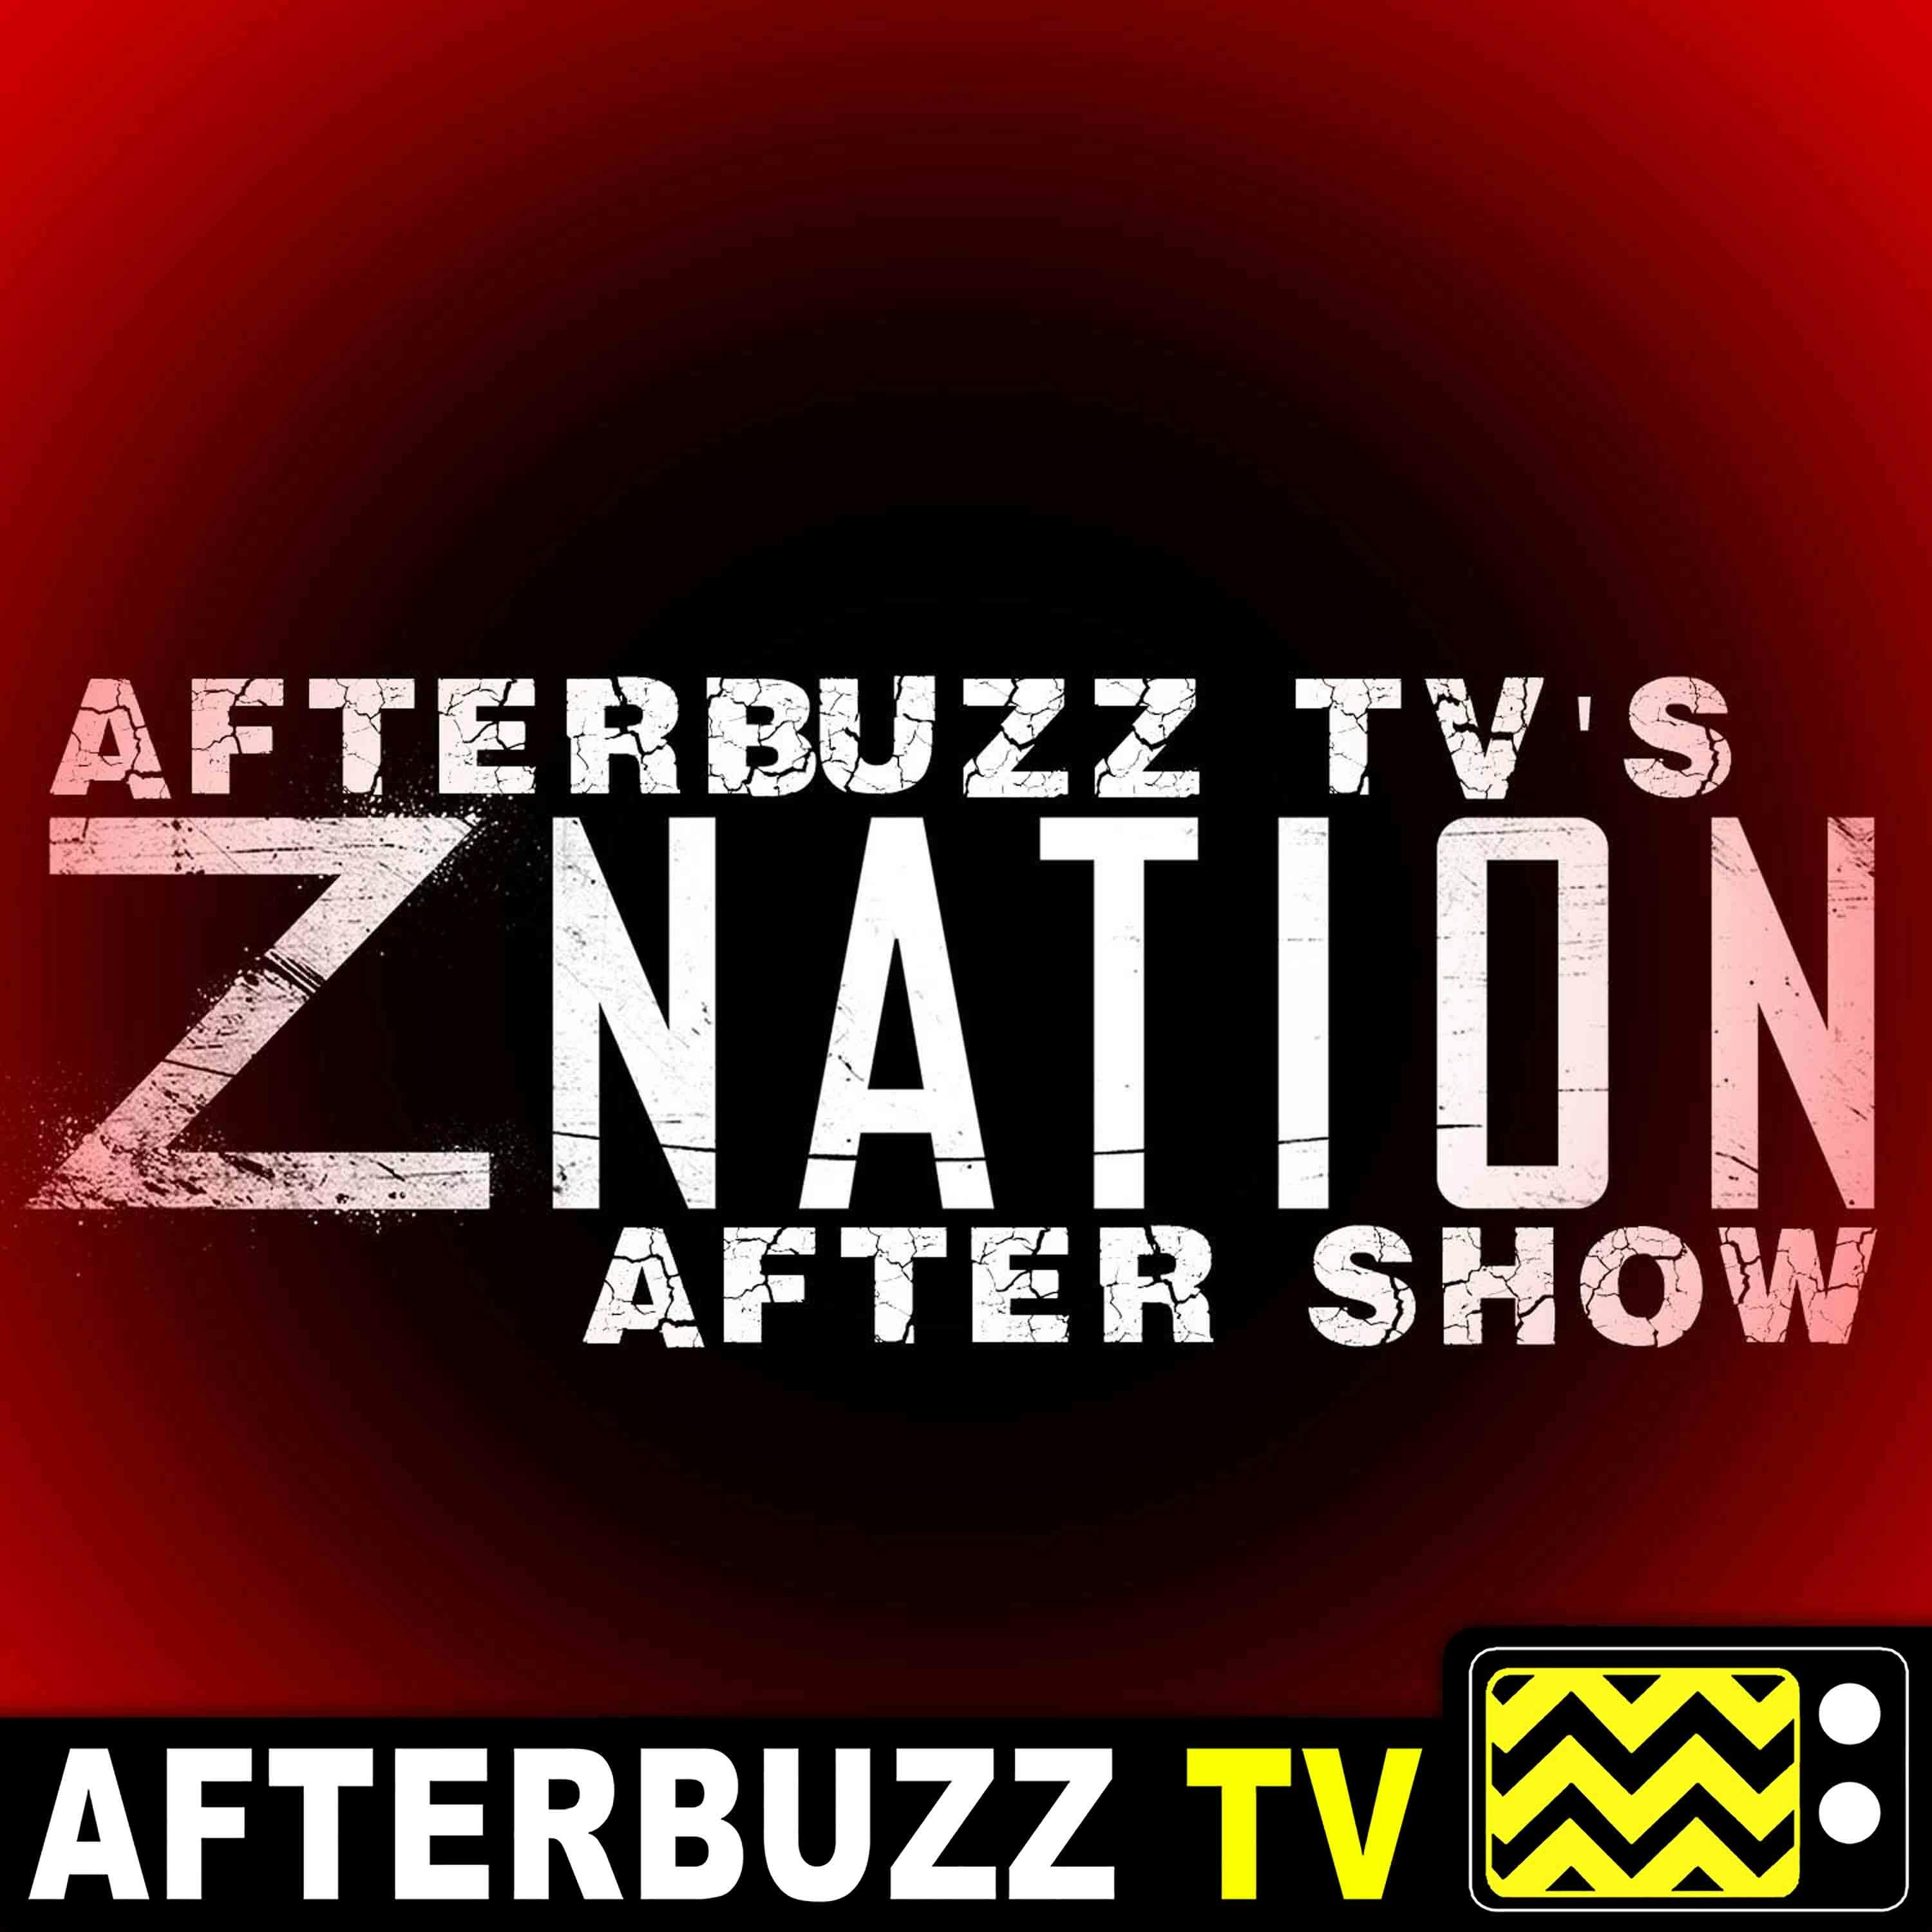 Z Nation S:4 | Jen Derwingson Guests On Crisis of Faith E:8 | AfterBuzz TV AfterShow